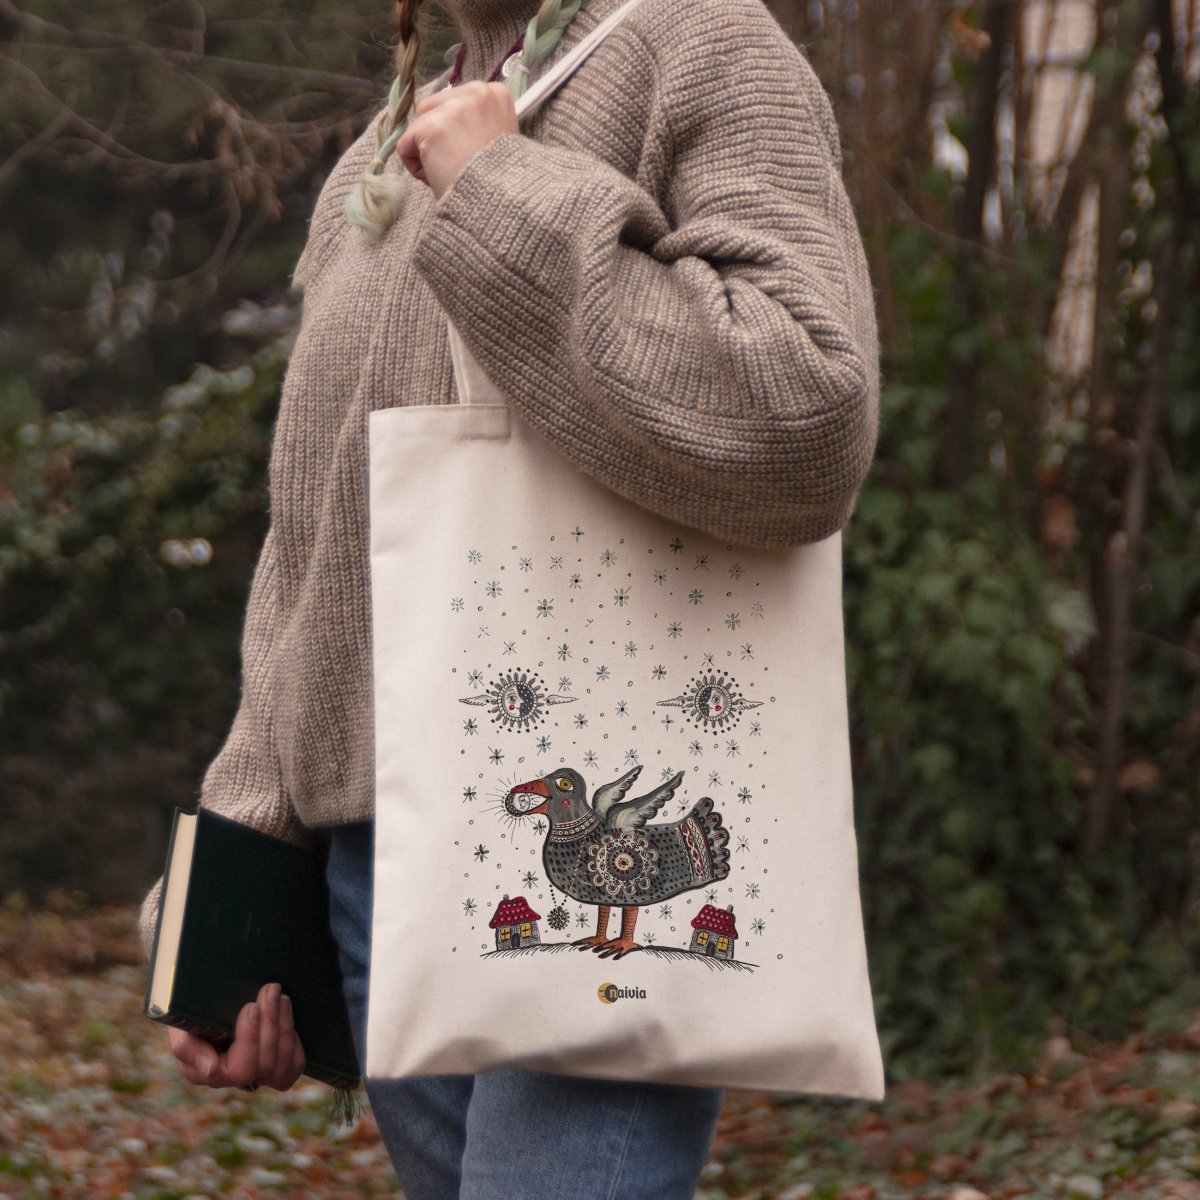 Printed Tote Bag, "The Moon Thief", 100% cotton, 31x40 cm